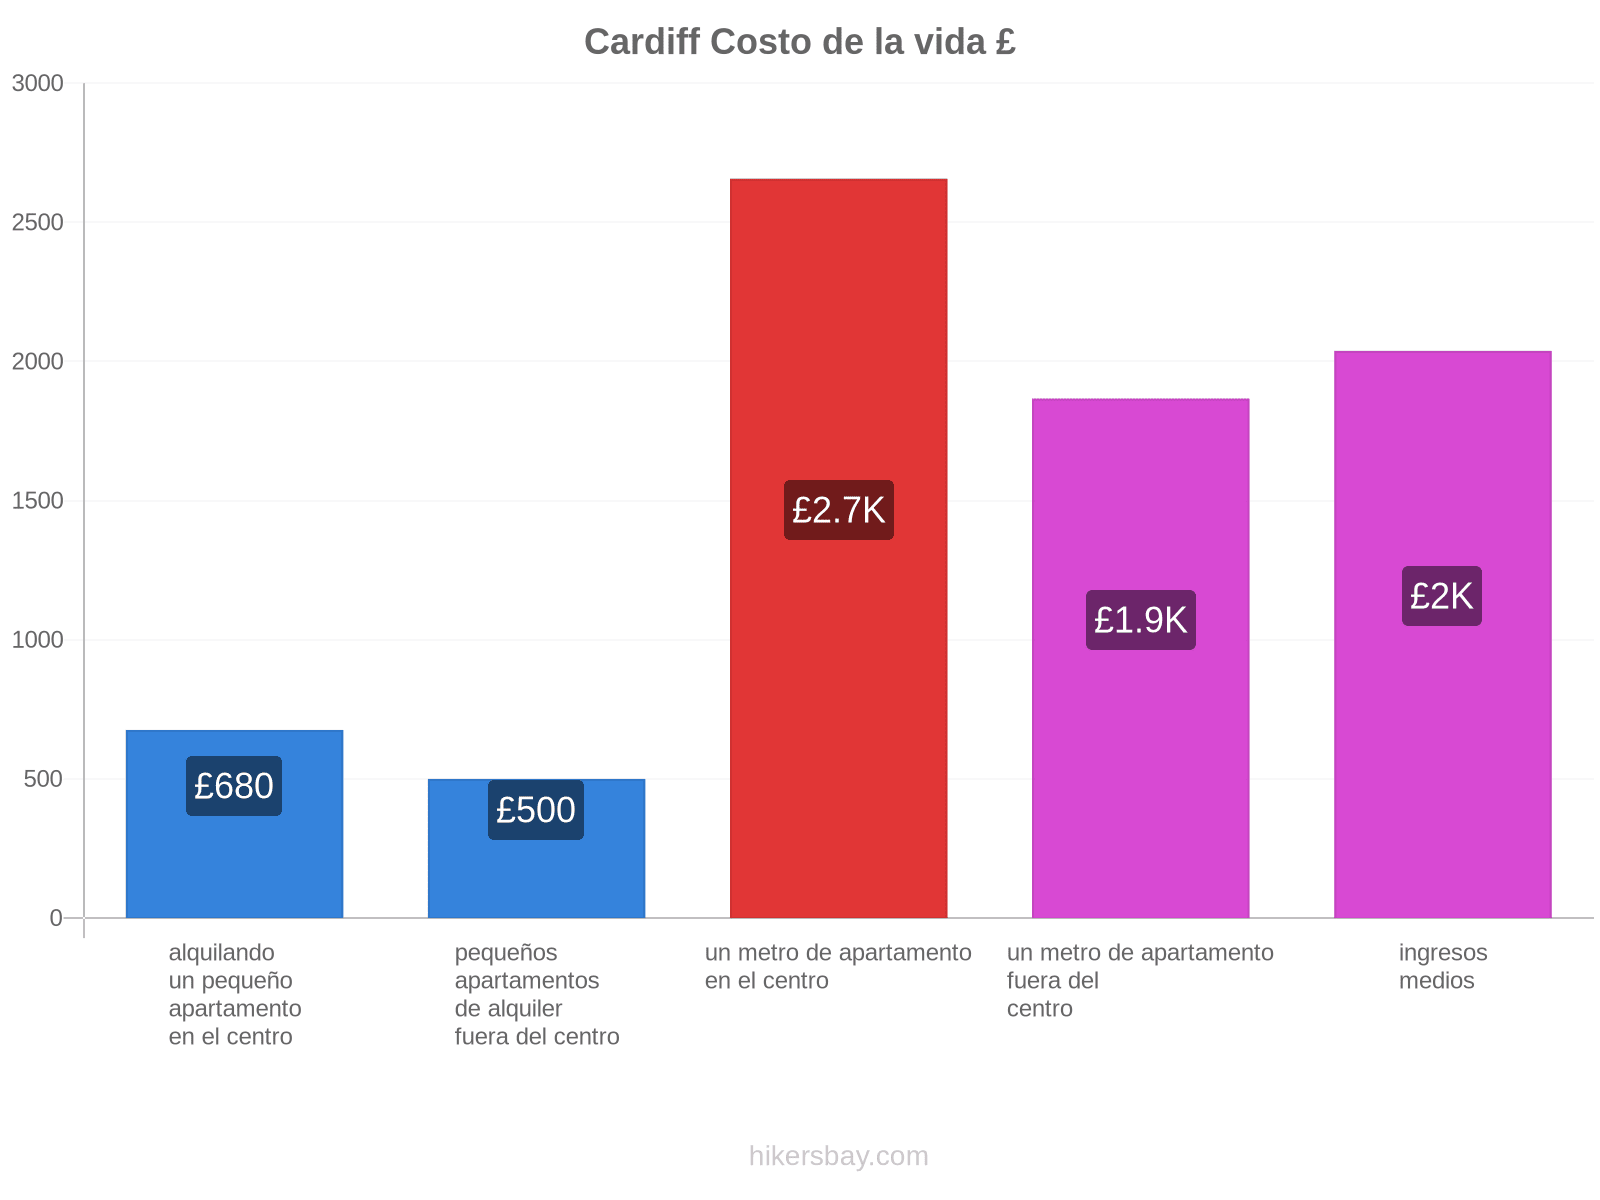 Cardiff costo de la vida hikersbay.com